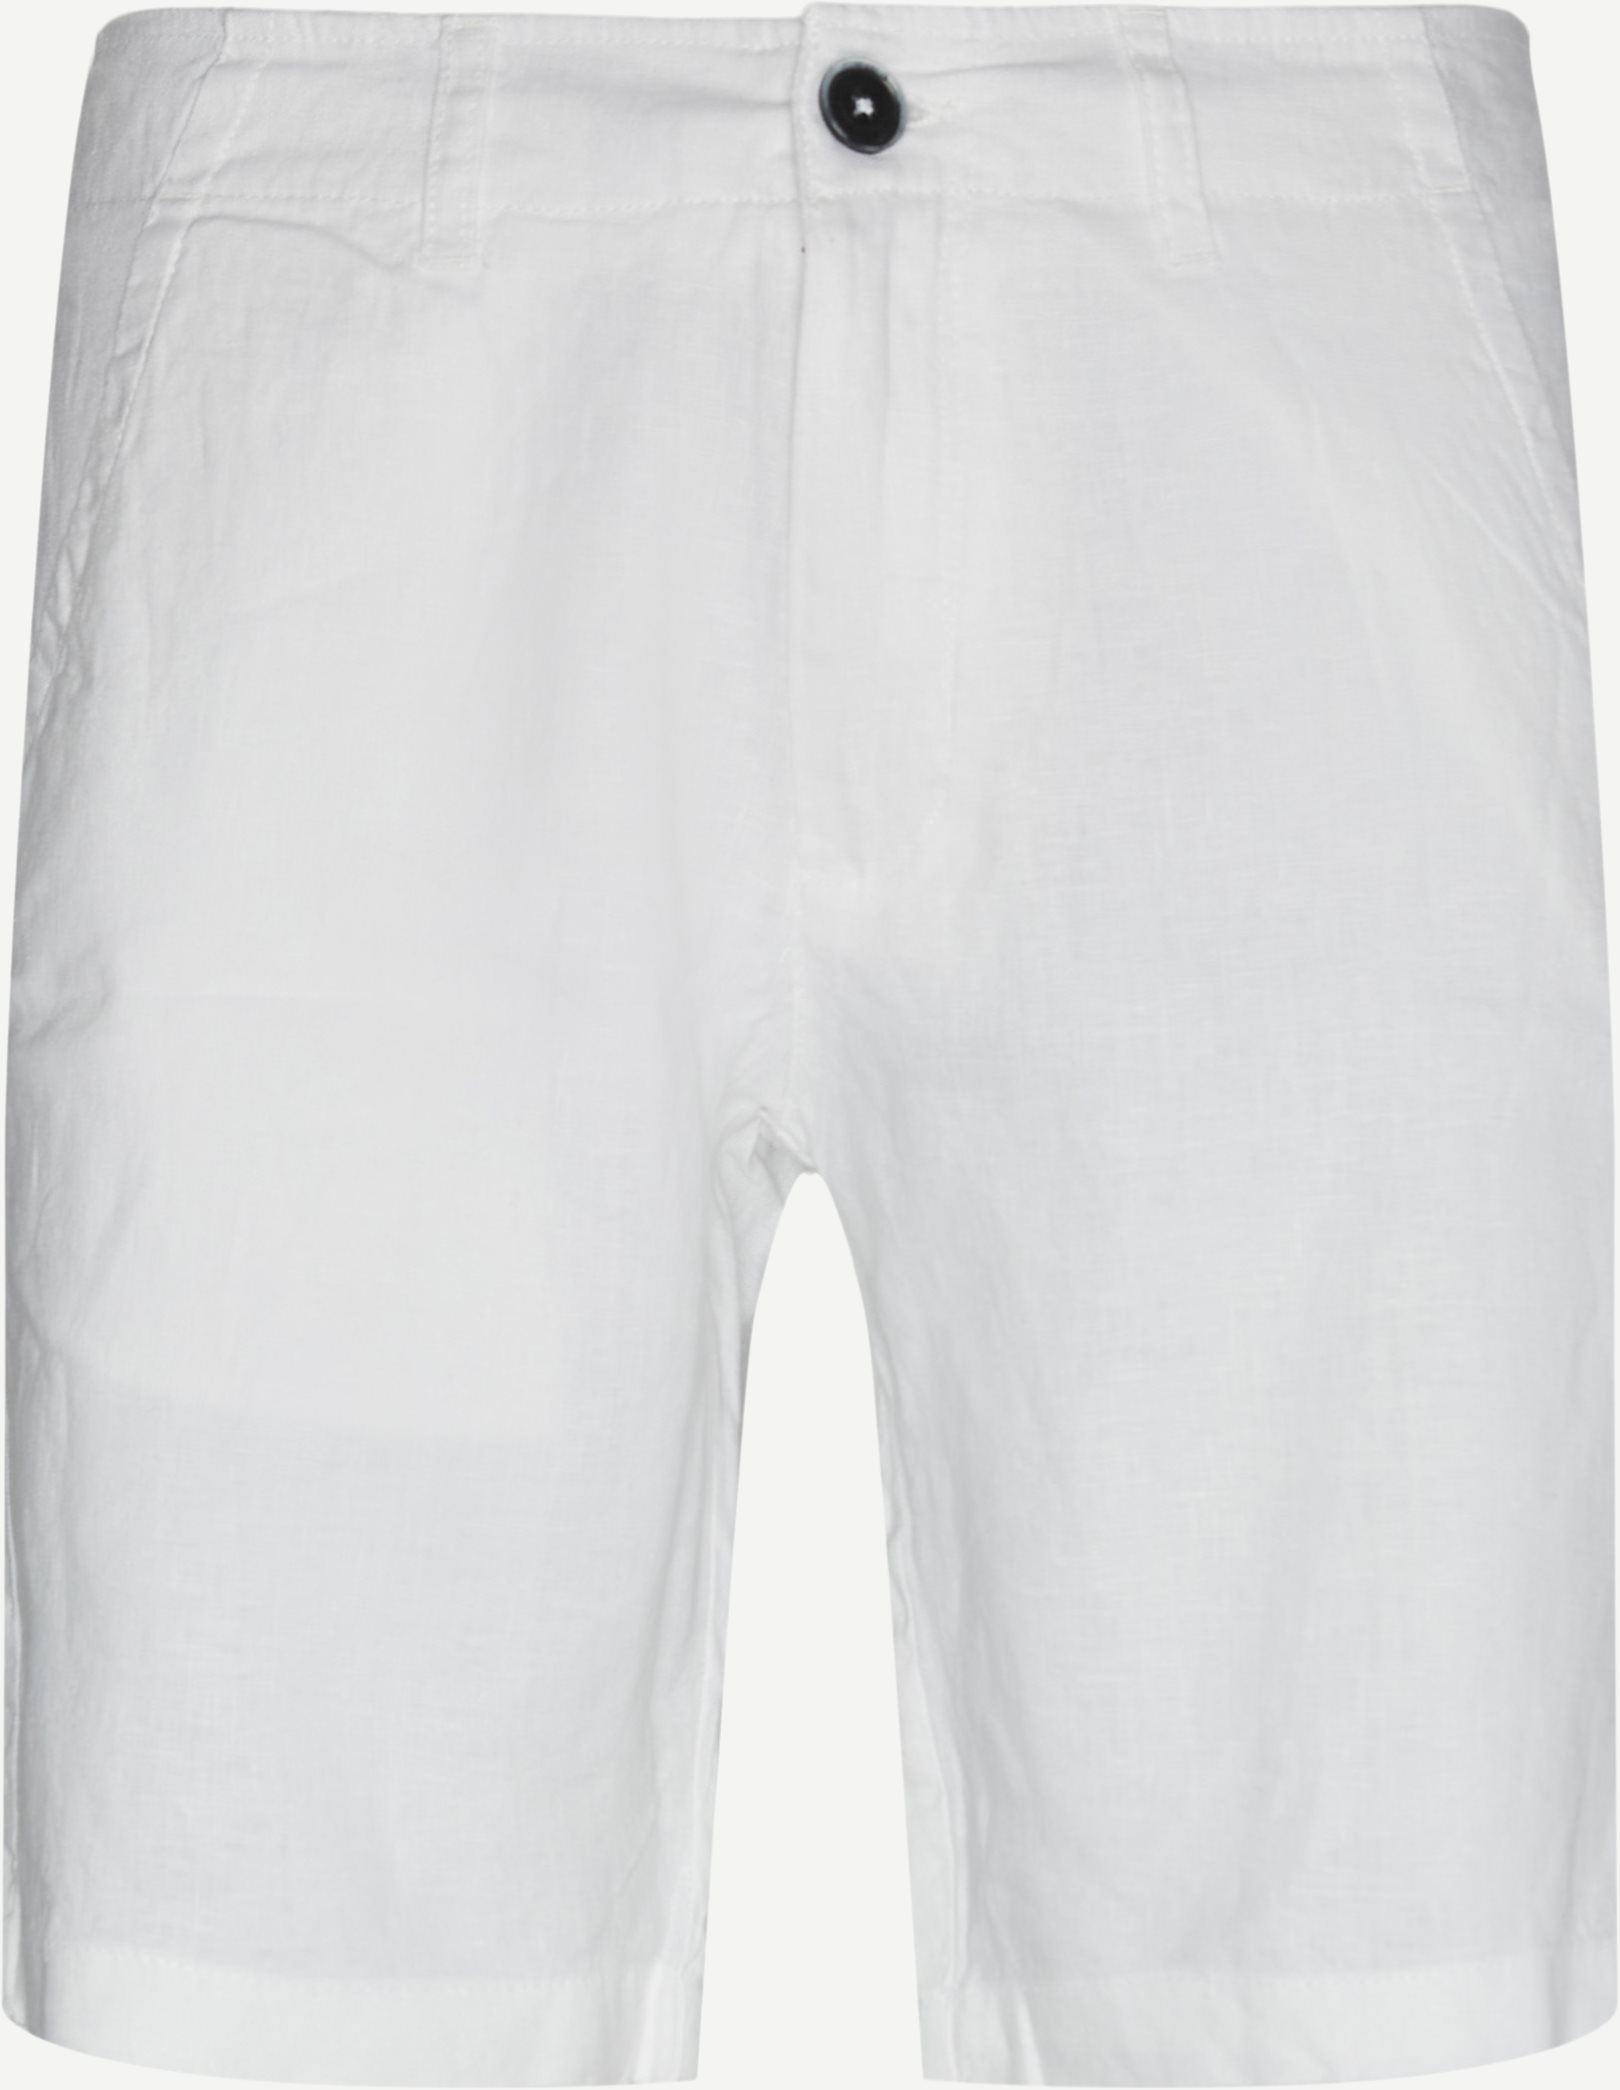 Mosby Shorts - Shorts - Regular fit - White